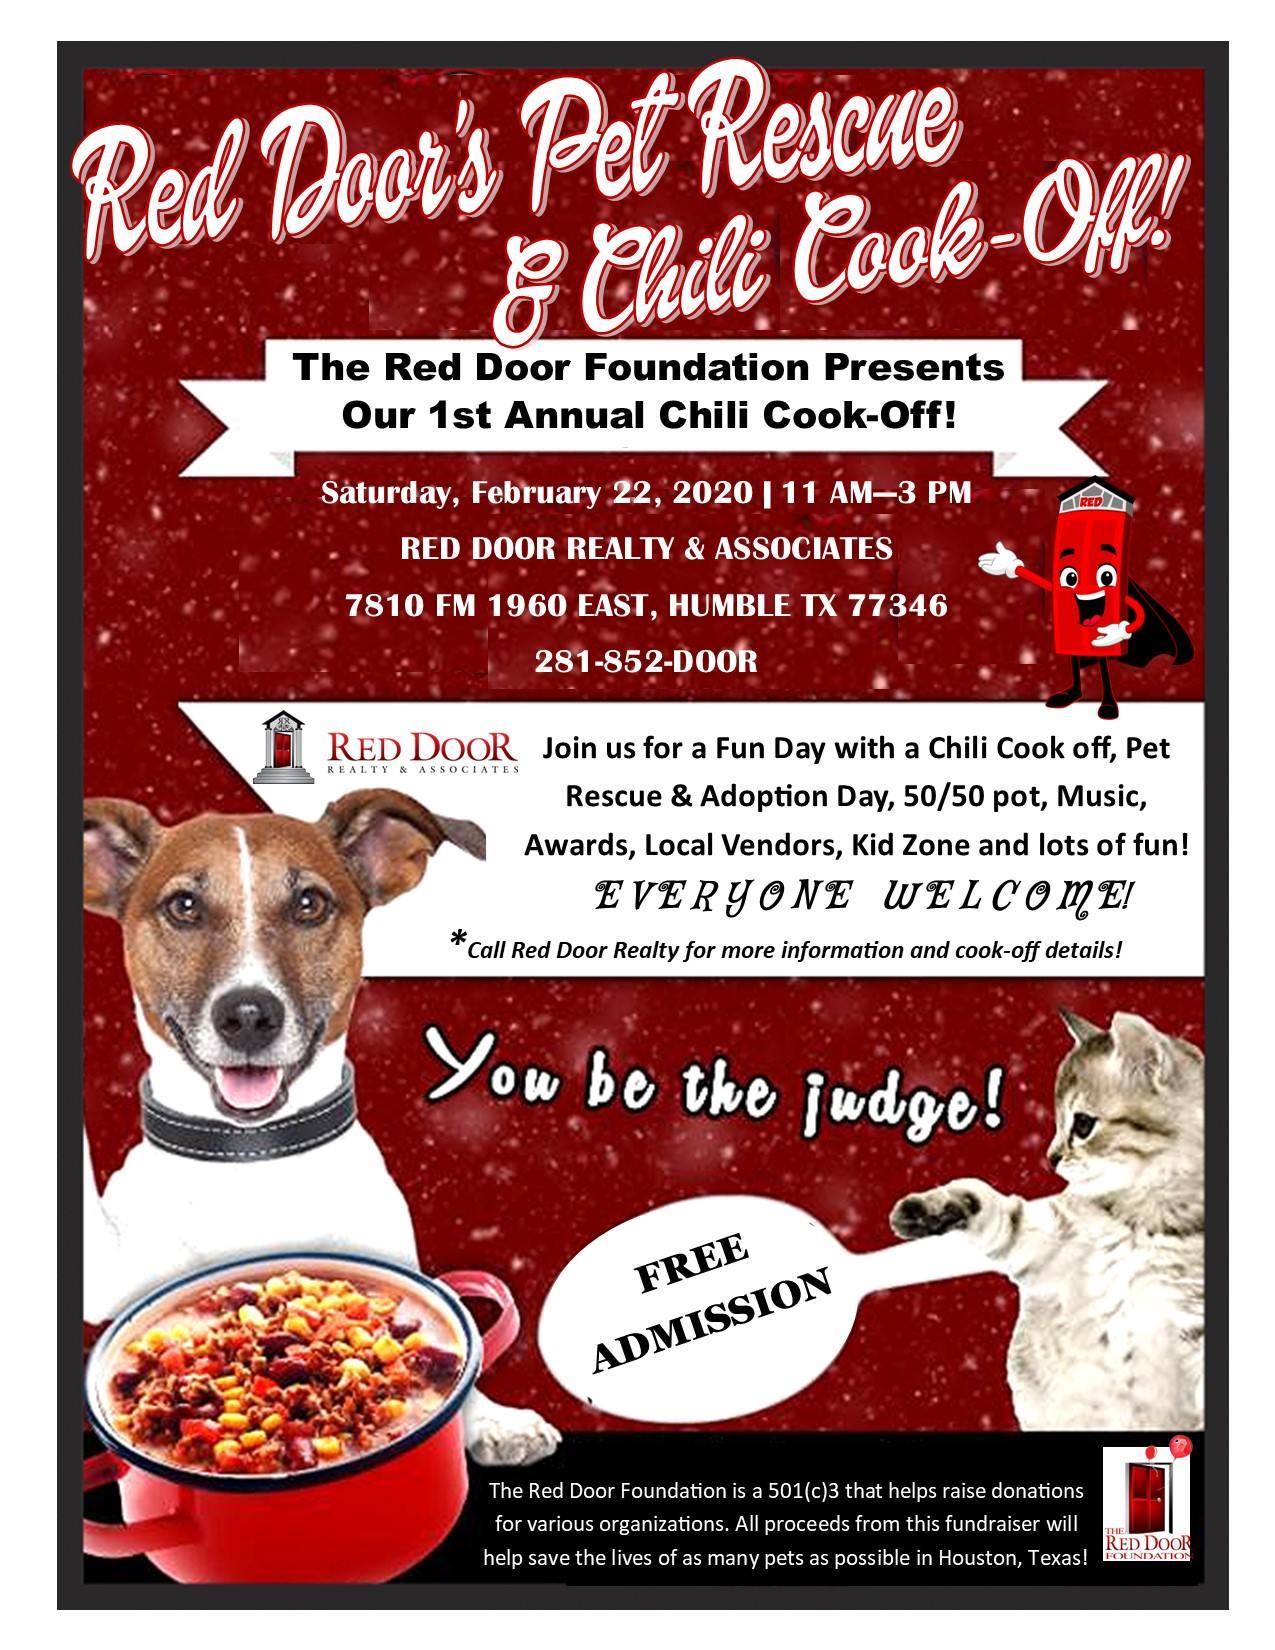 Red Door's Pet Rescue & Chili Cook-Off!